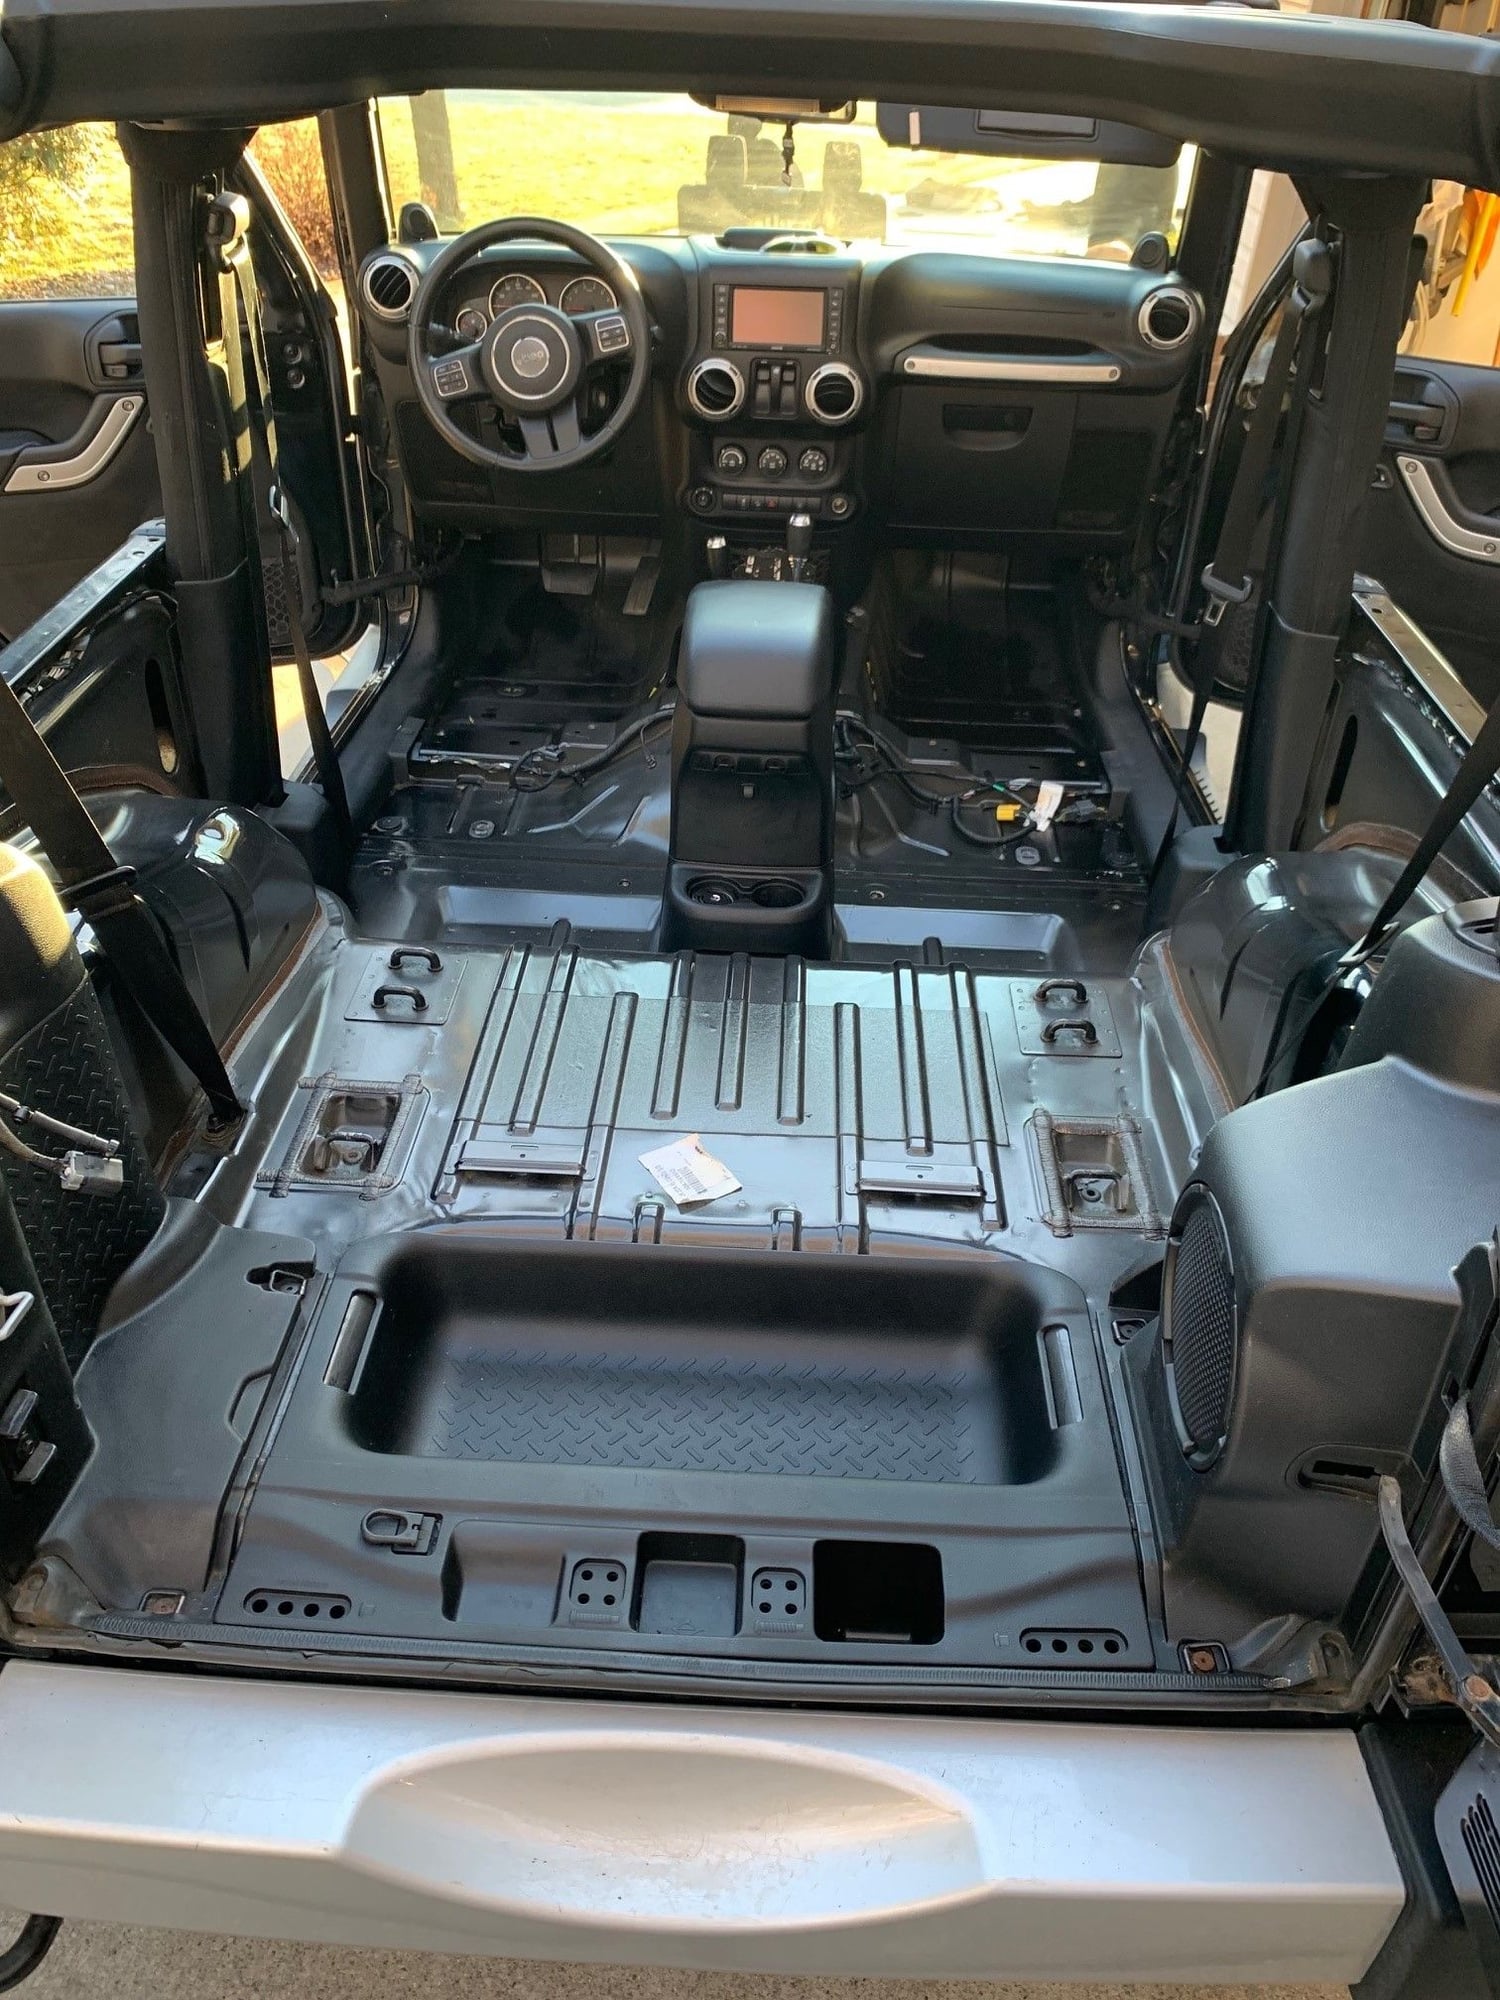 2014 Jeep Wrangler - 2014 JEEP Wrangler Sahara Sport 2D - Used - VIN 1C4AJWBG8EL303449 - 173,200 Miles - 6 cyl - 4WD - Automatic - SUV - Black - Oxford, MI 48371, United States